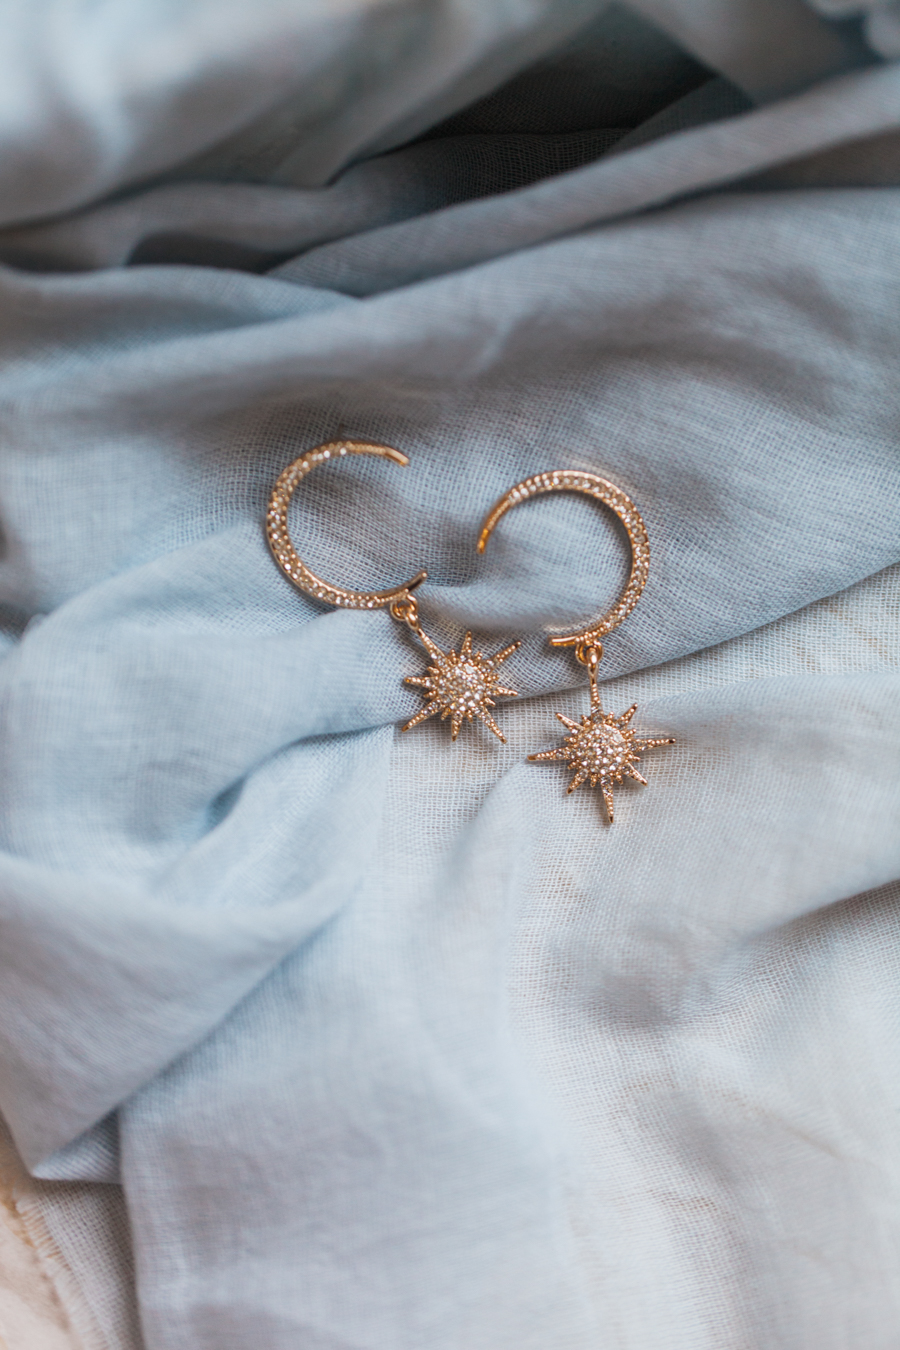 Starry celestial wedding inspiration (with a sprinkling of Disney magic) - Amanda Karen Photography (4)